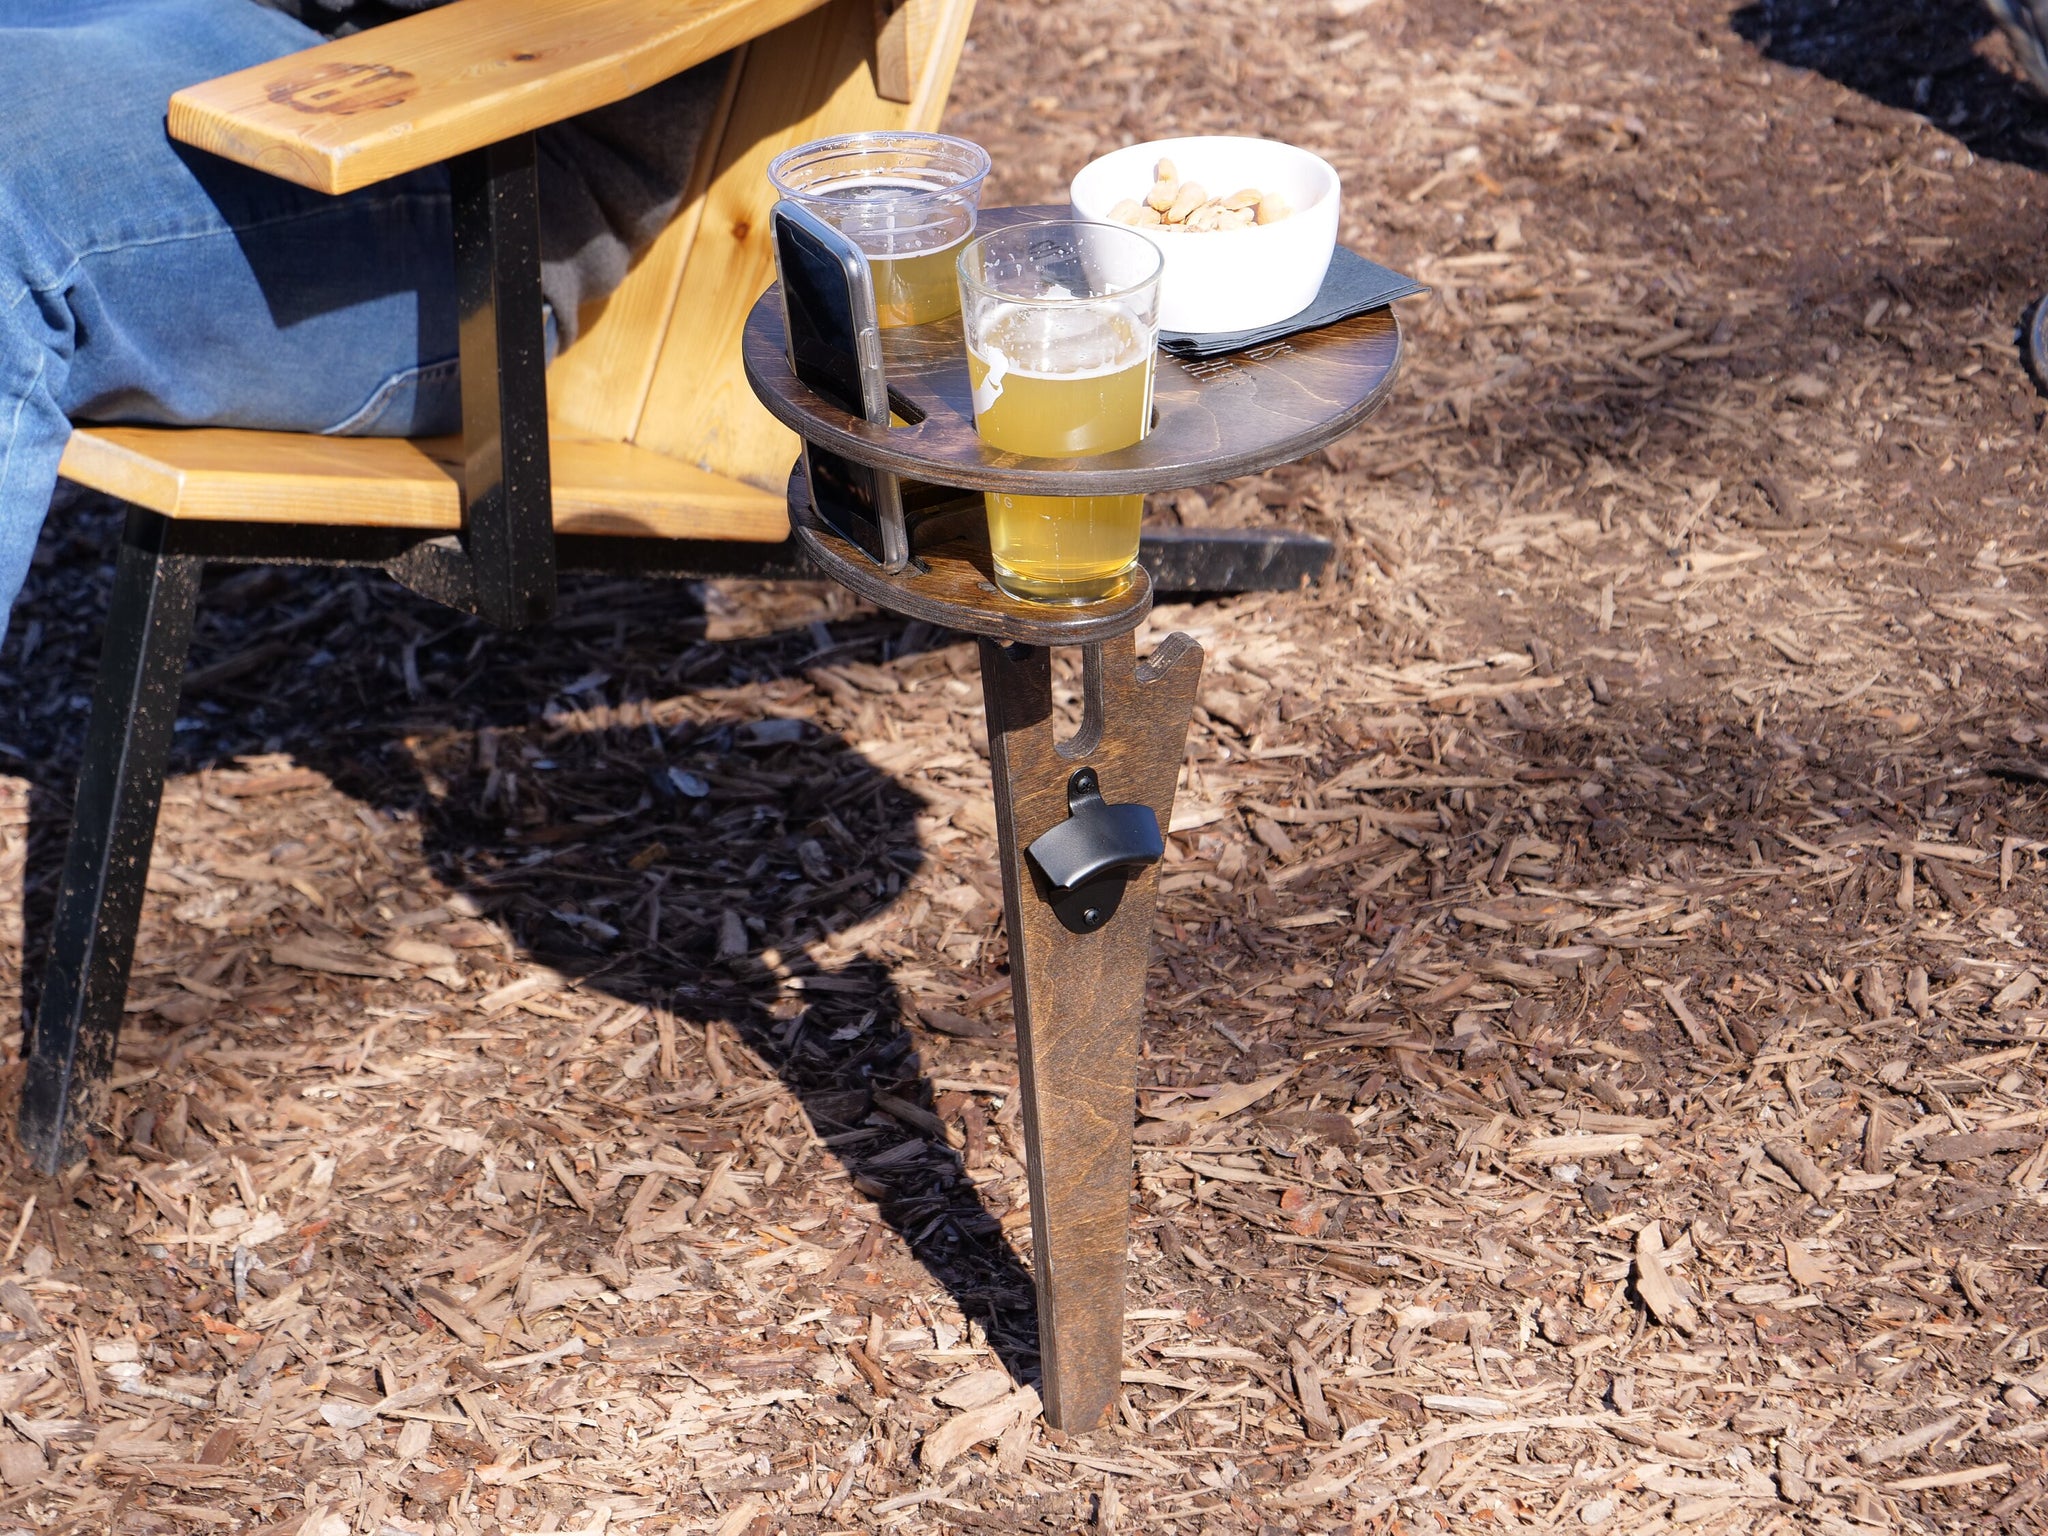 Folding Picnic Table Handmade Portable Wine and Drinks Bar Wine